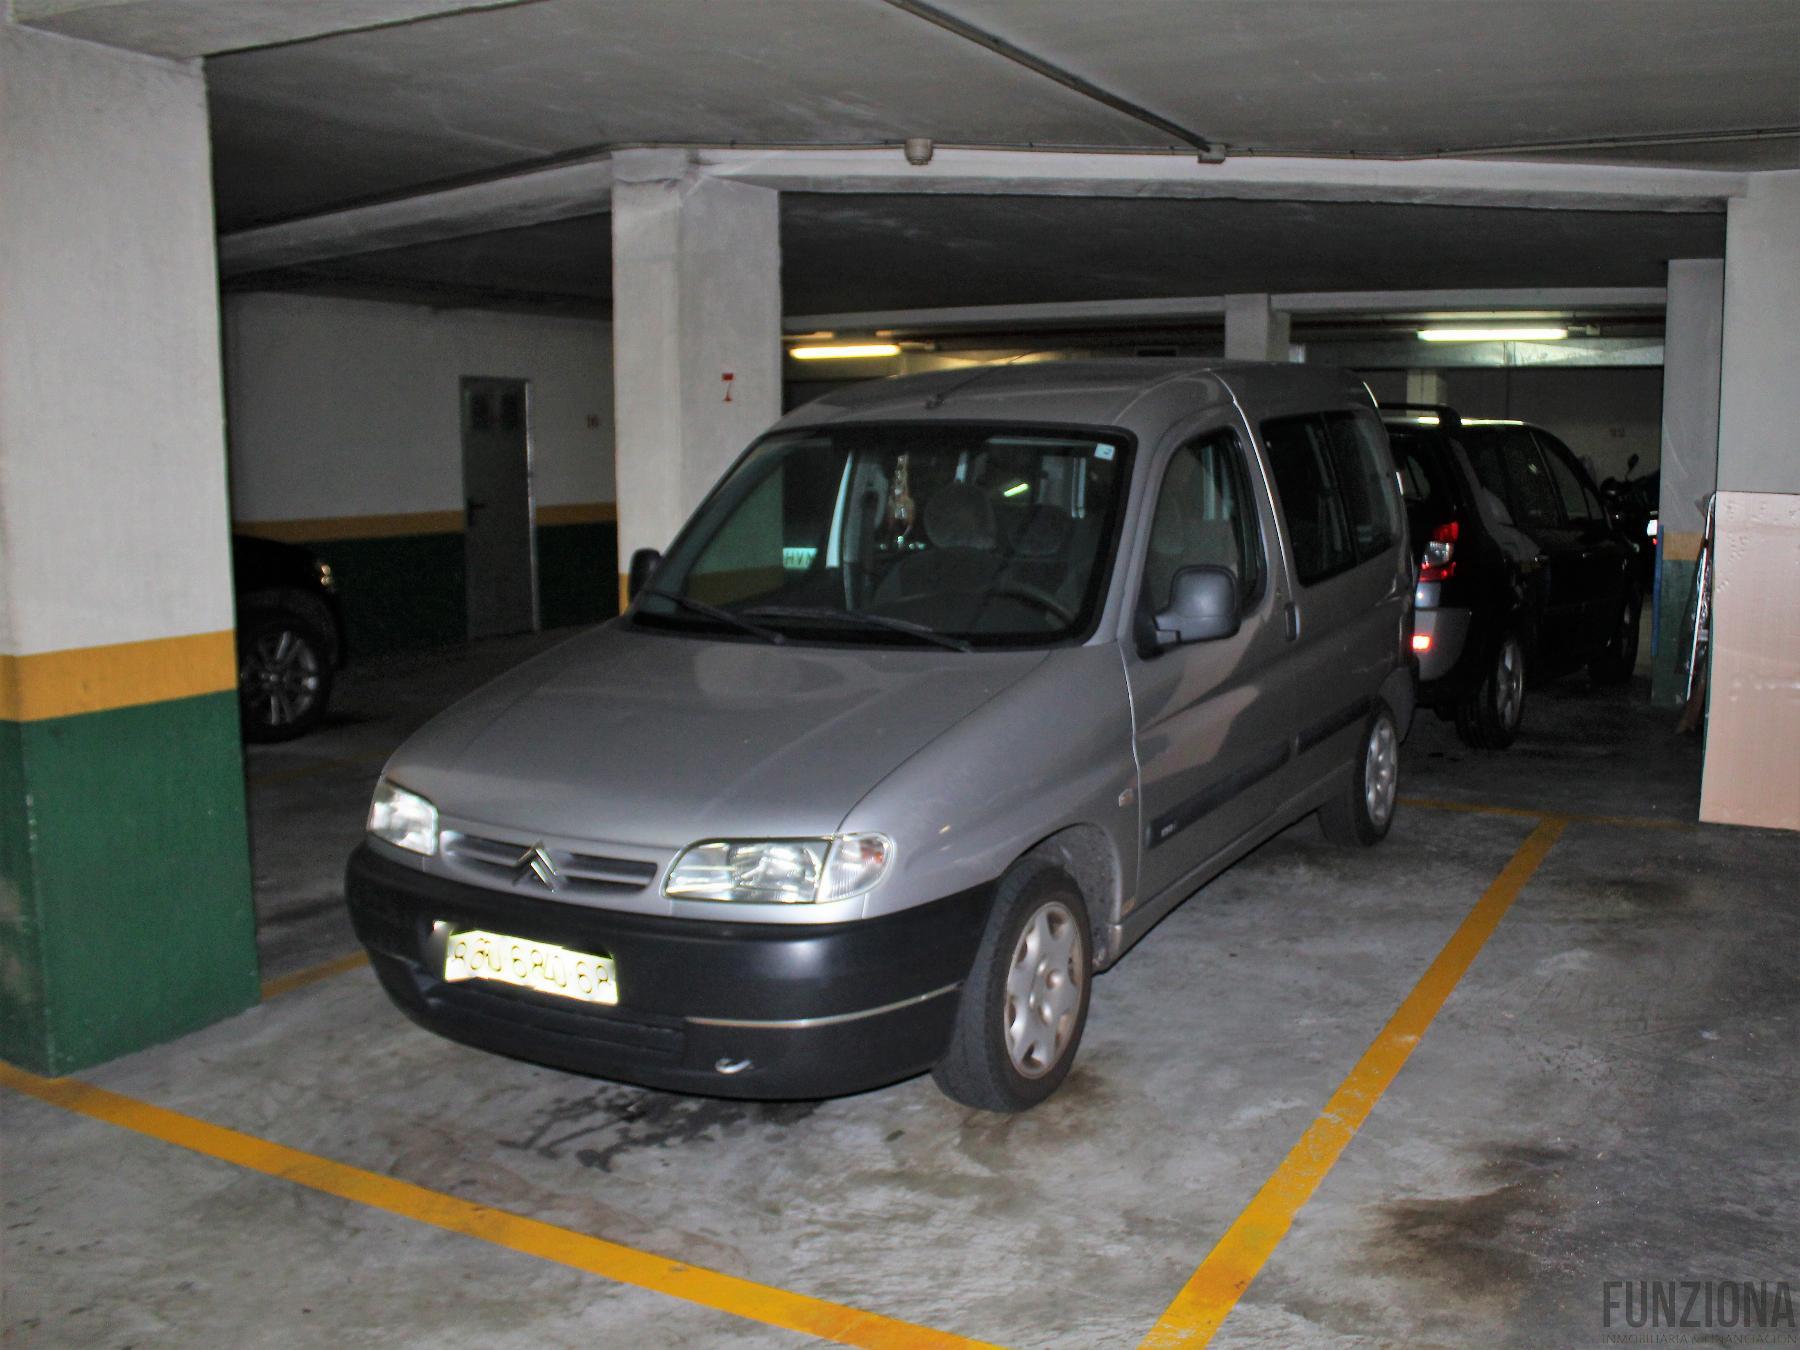 Venta de garaje en Pontevedra